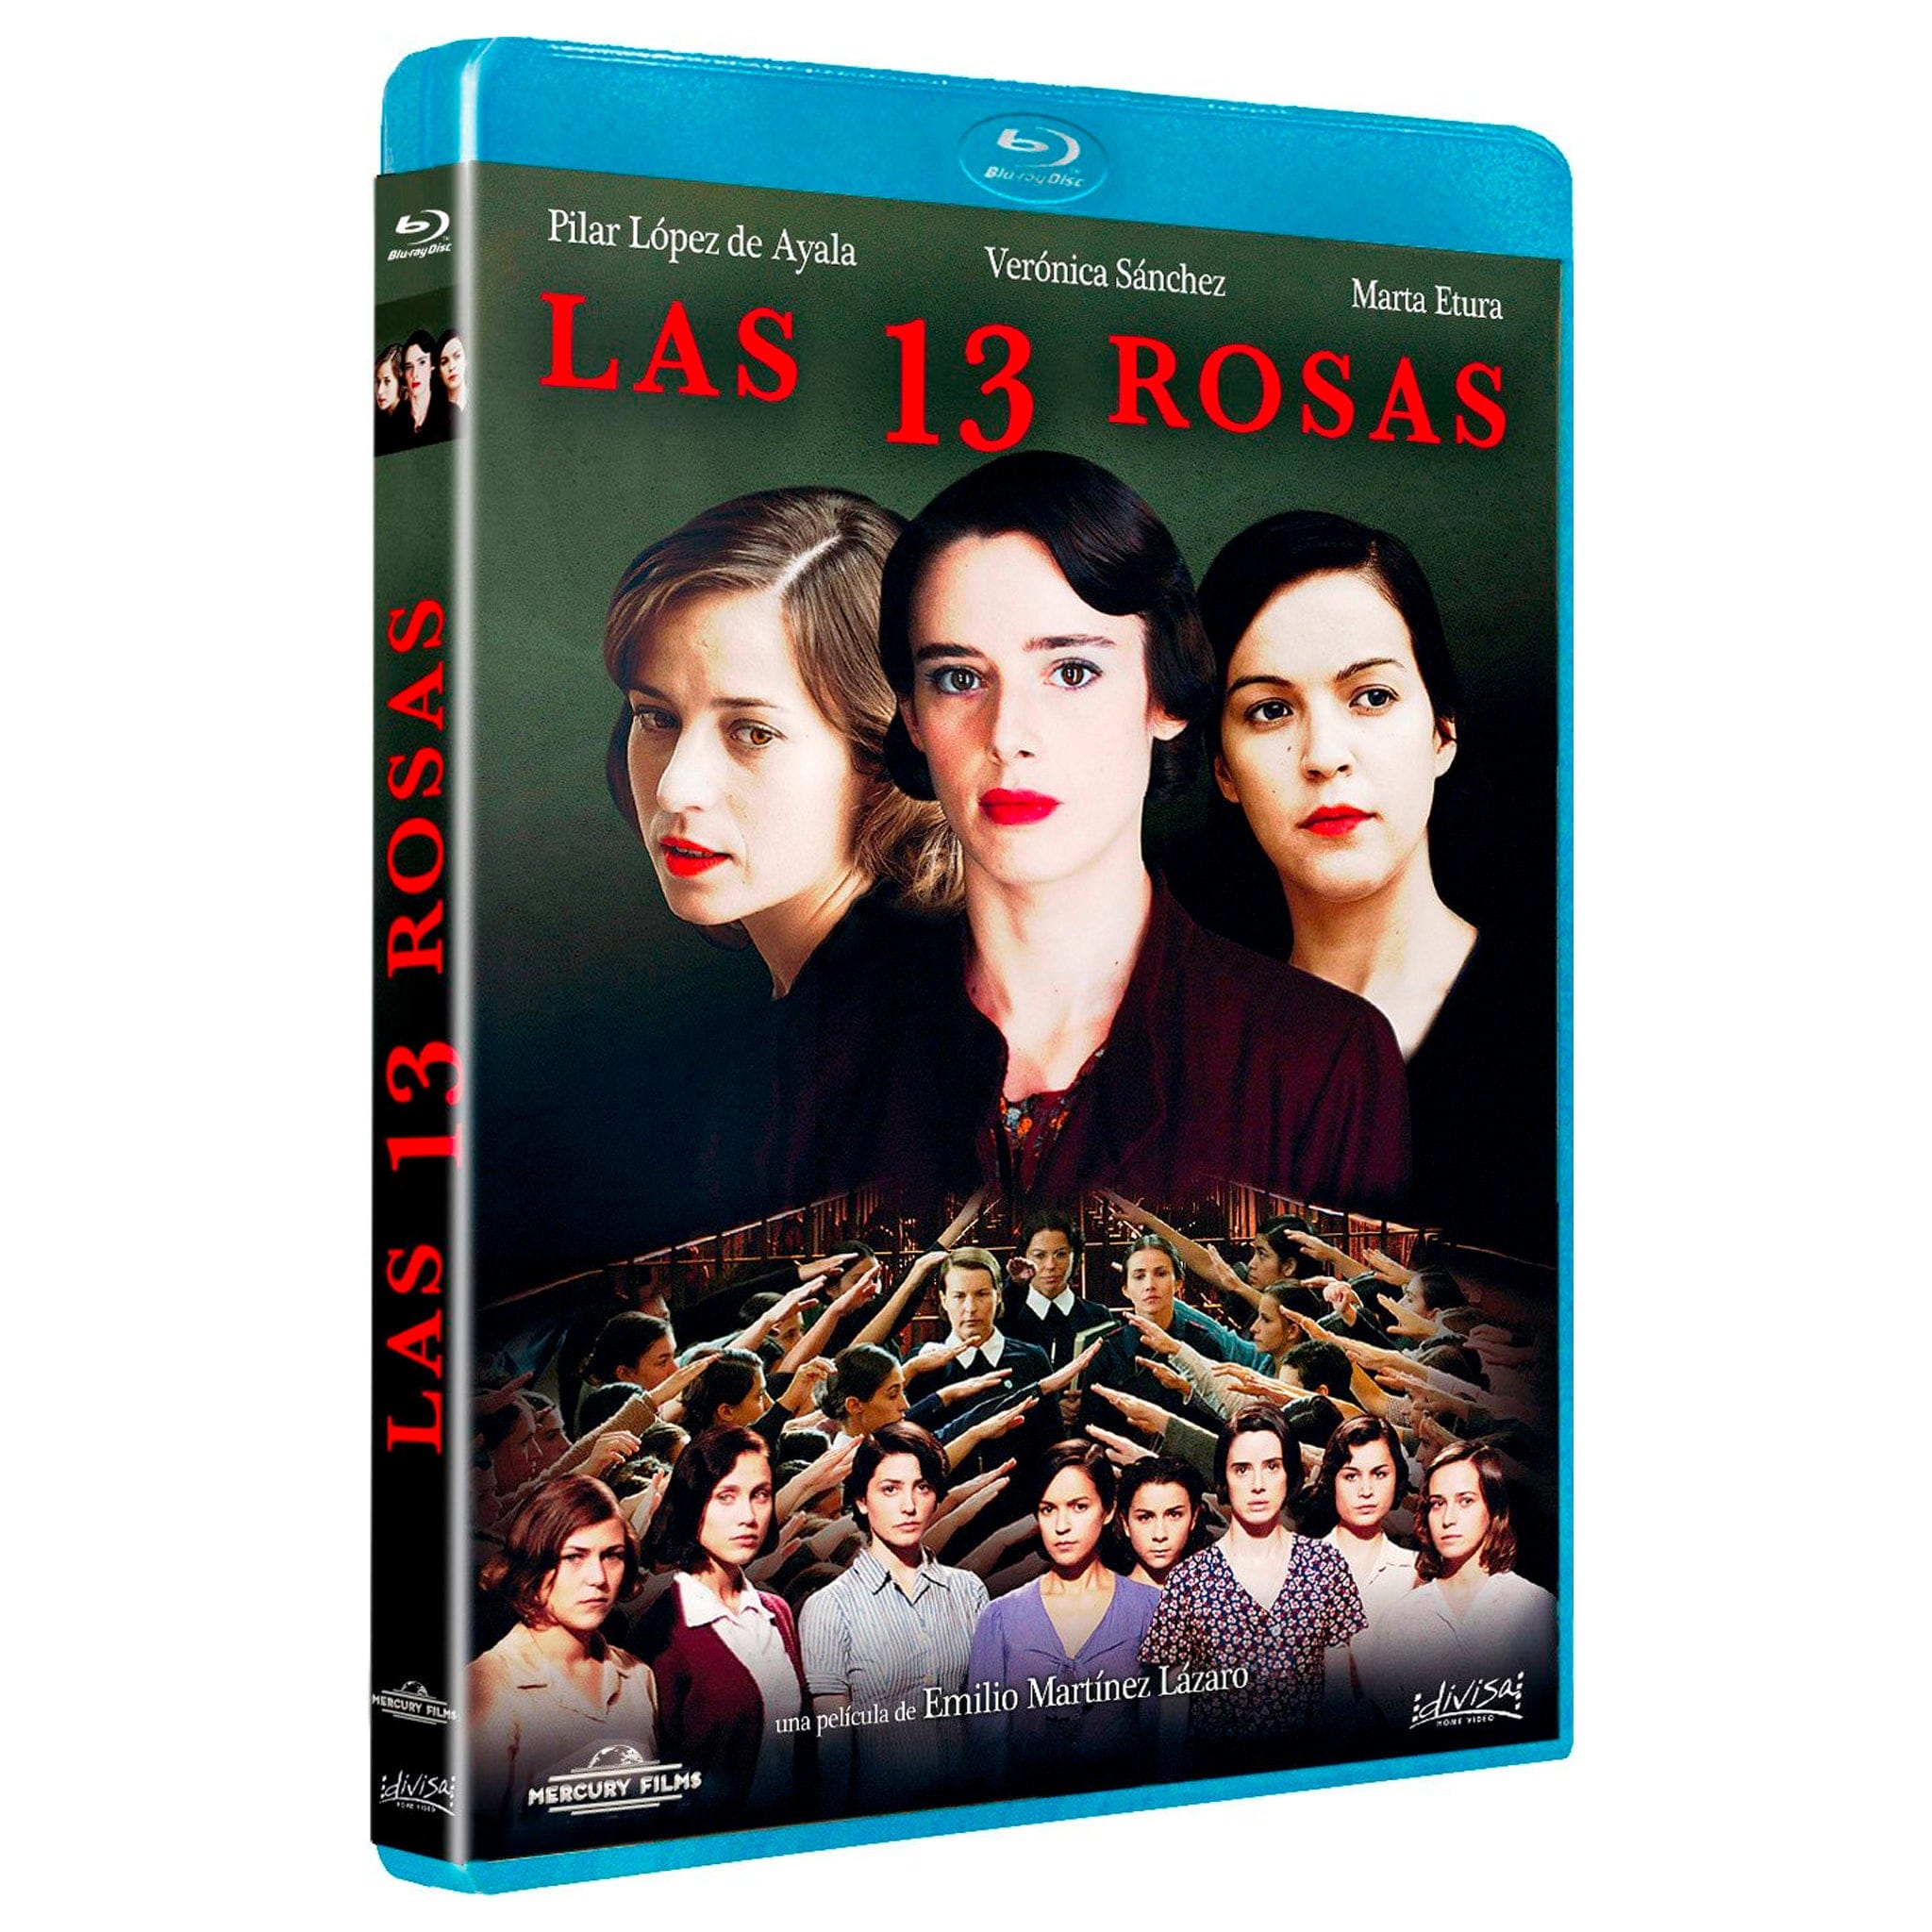 Las 13 Rosas Blu-Ray - Universe of Entertainment